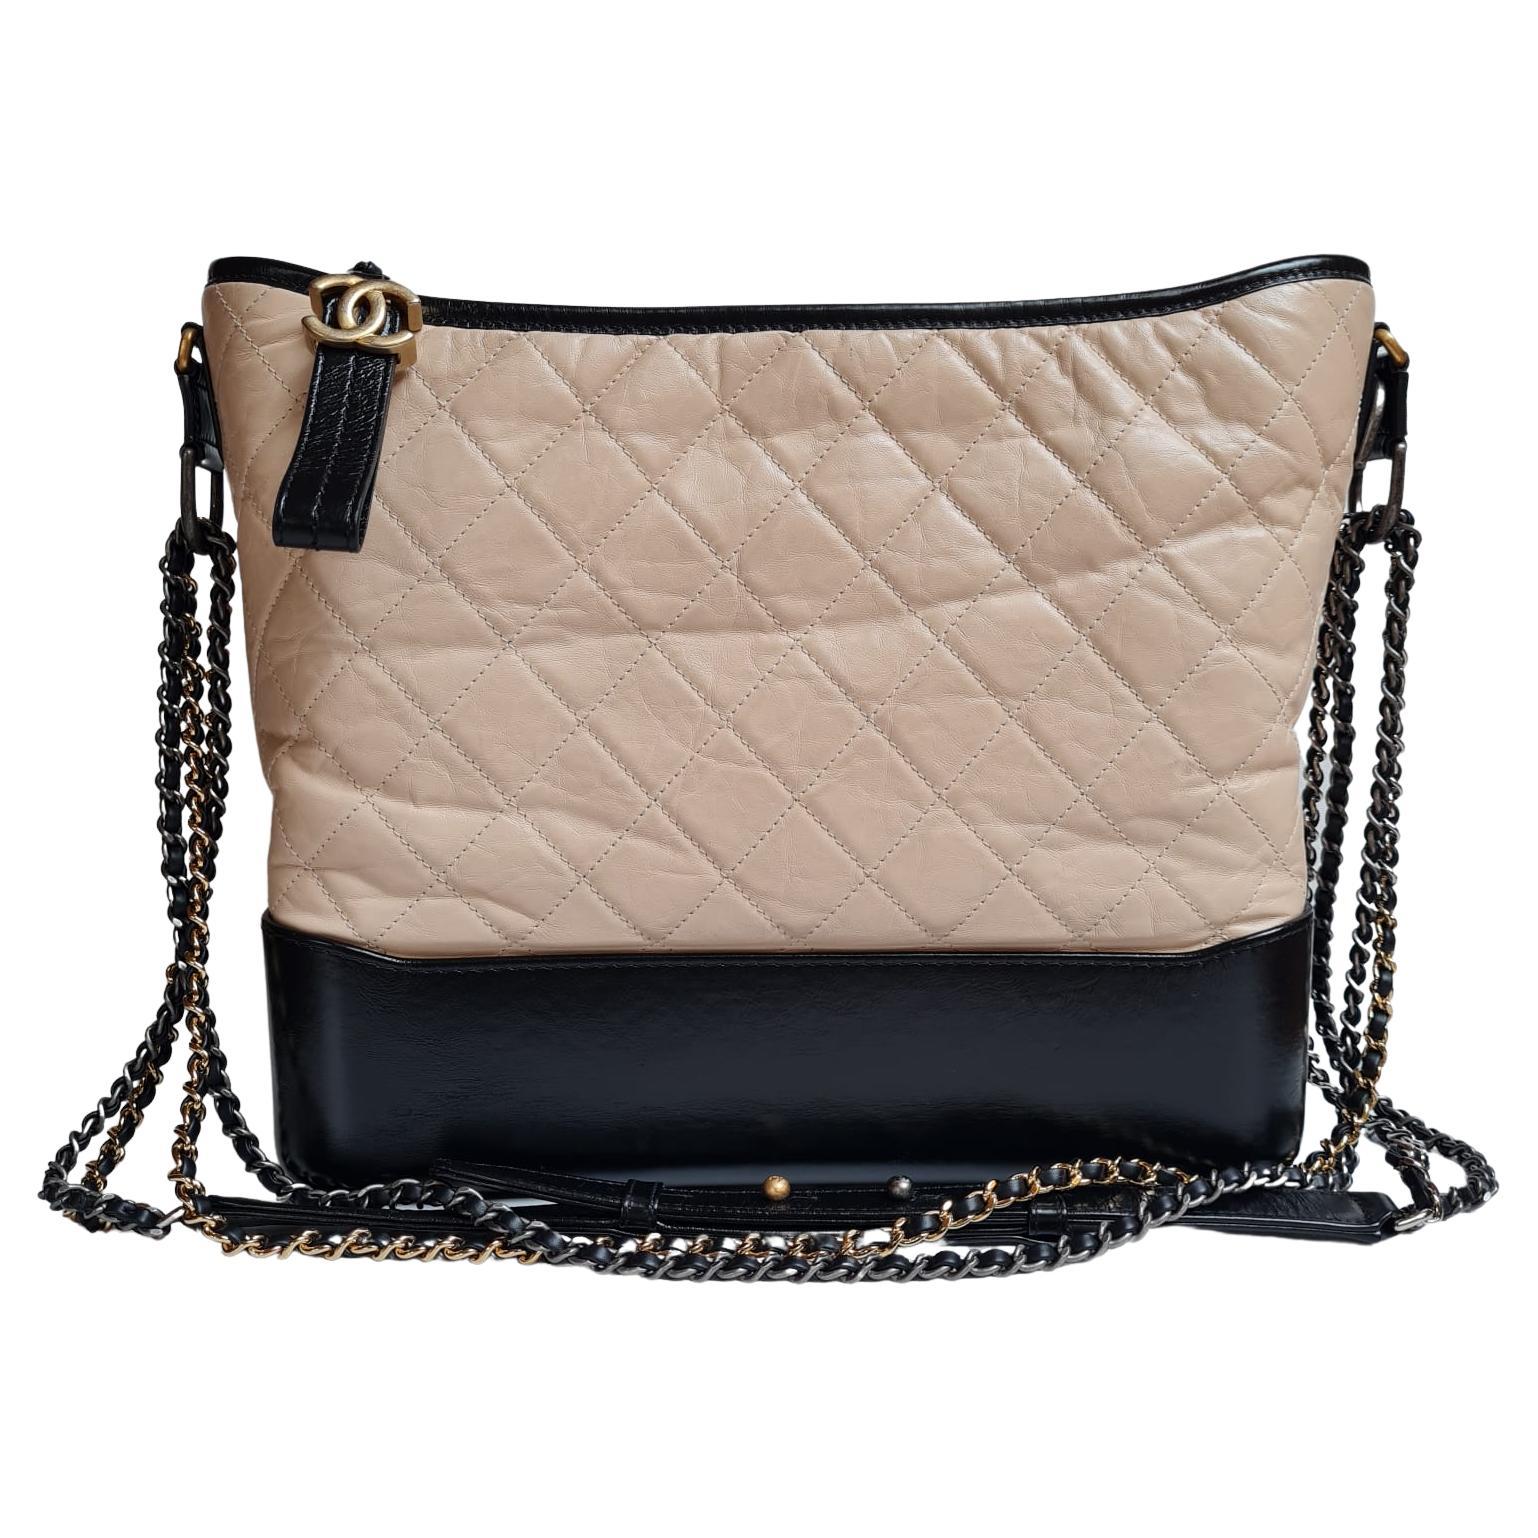 How do you wear a Chanel Gabrielle bag?